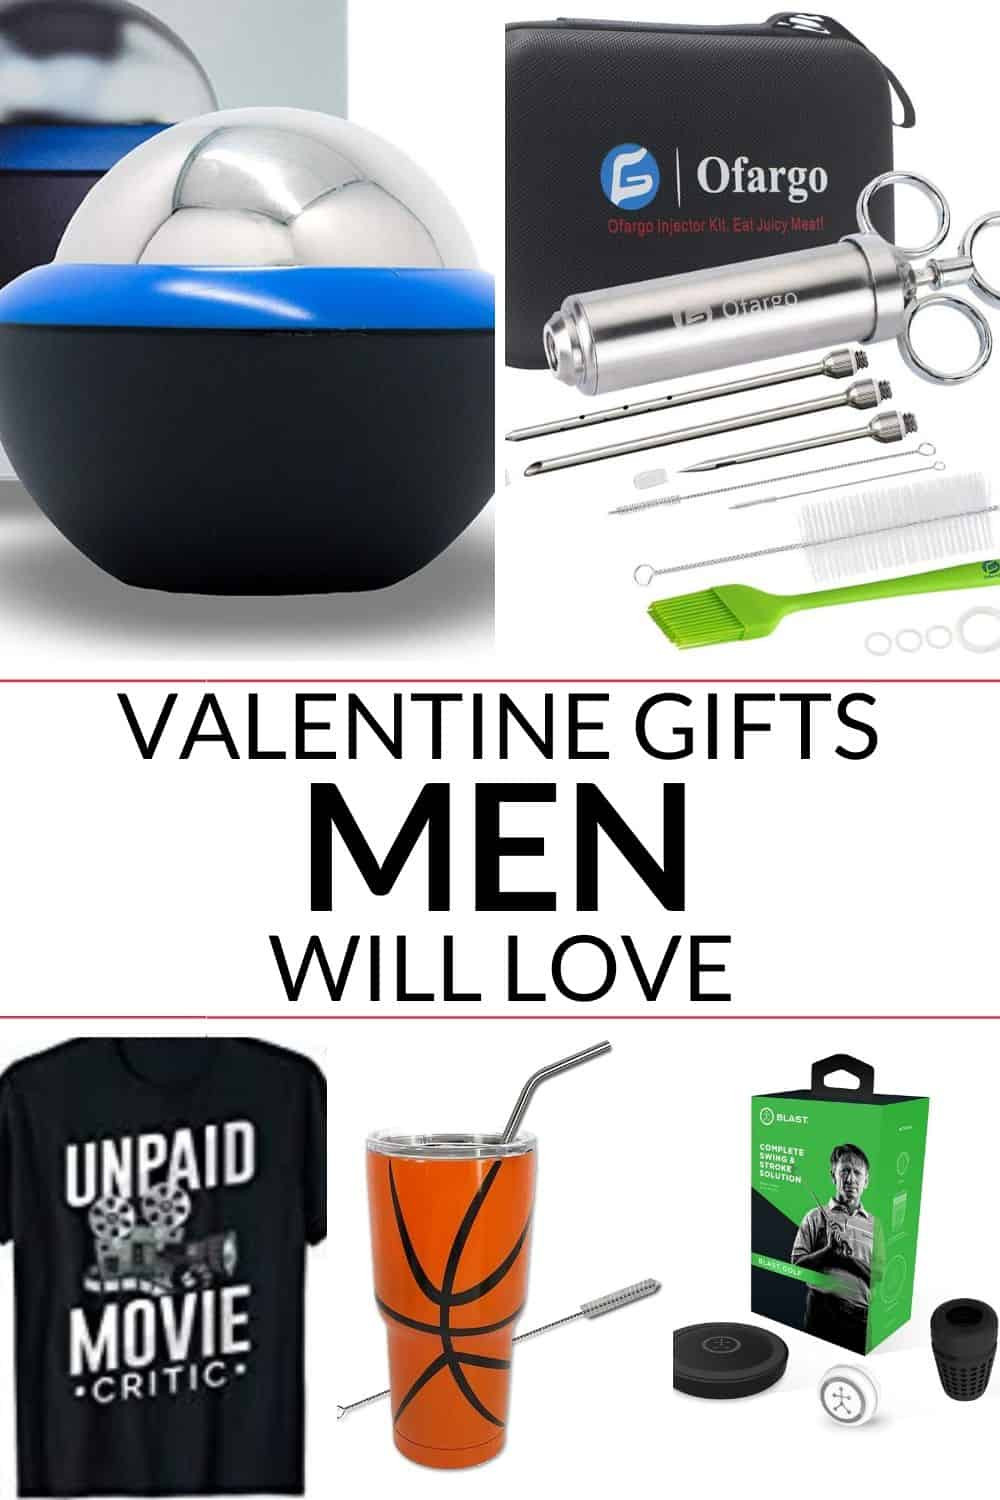 Valentines Gift For Husband Ideas
 Valentine Gift for Husband Great ideas